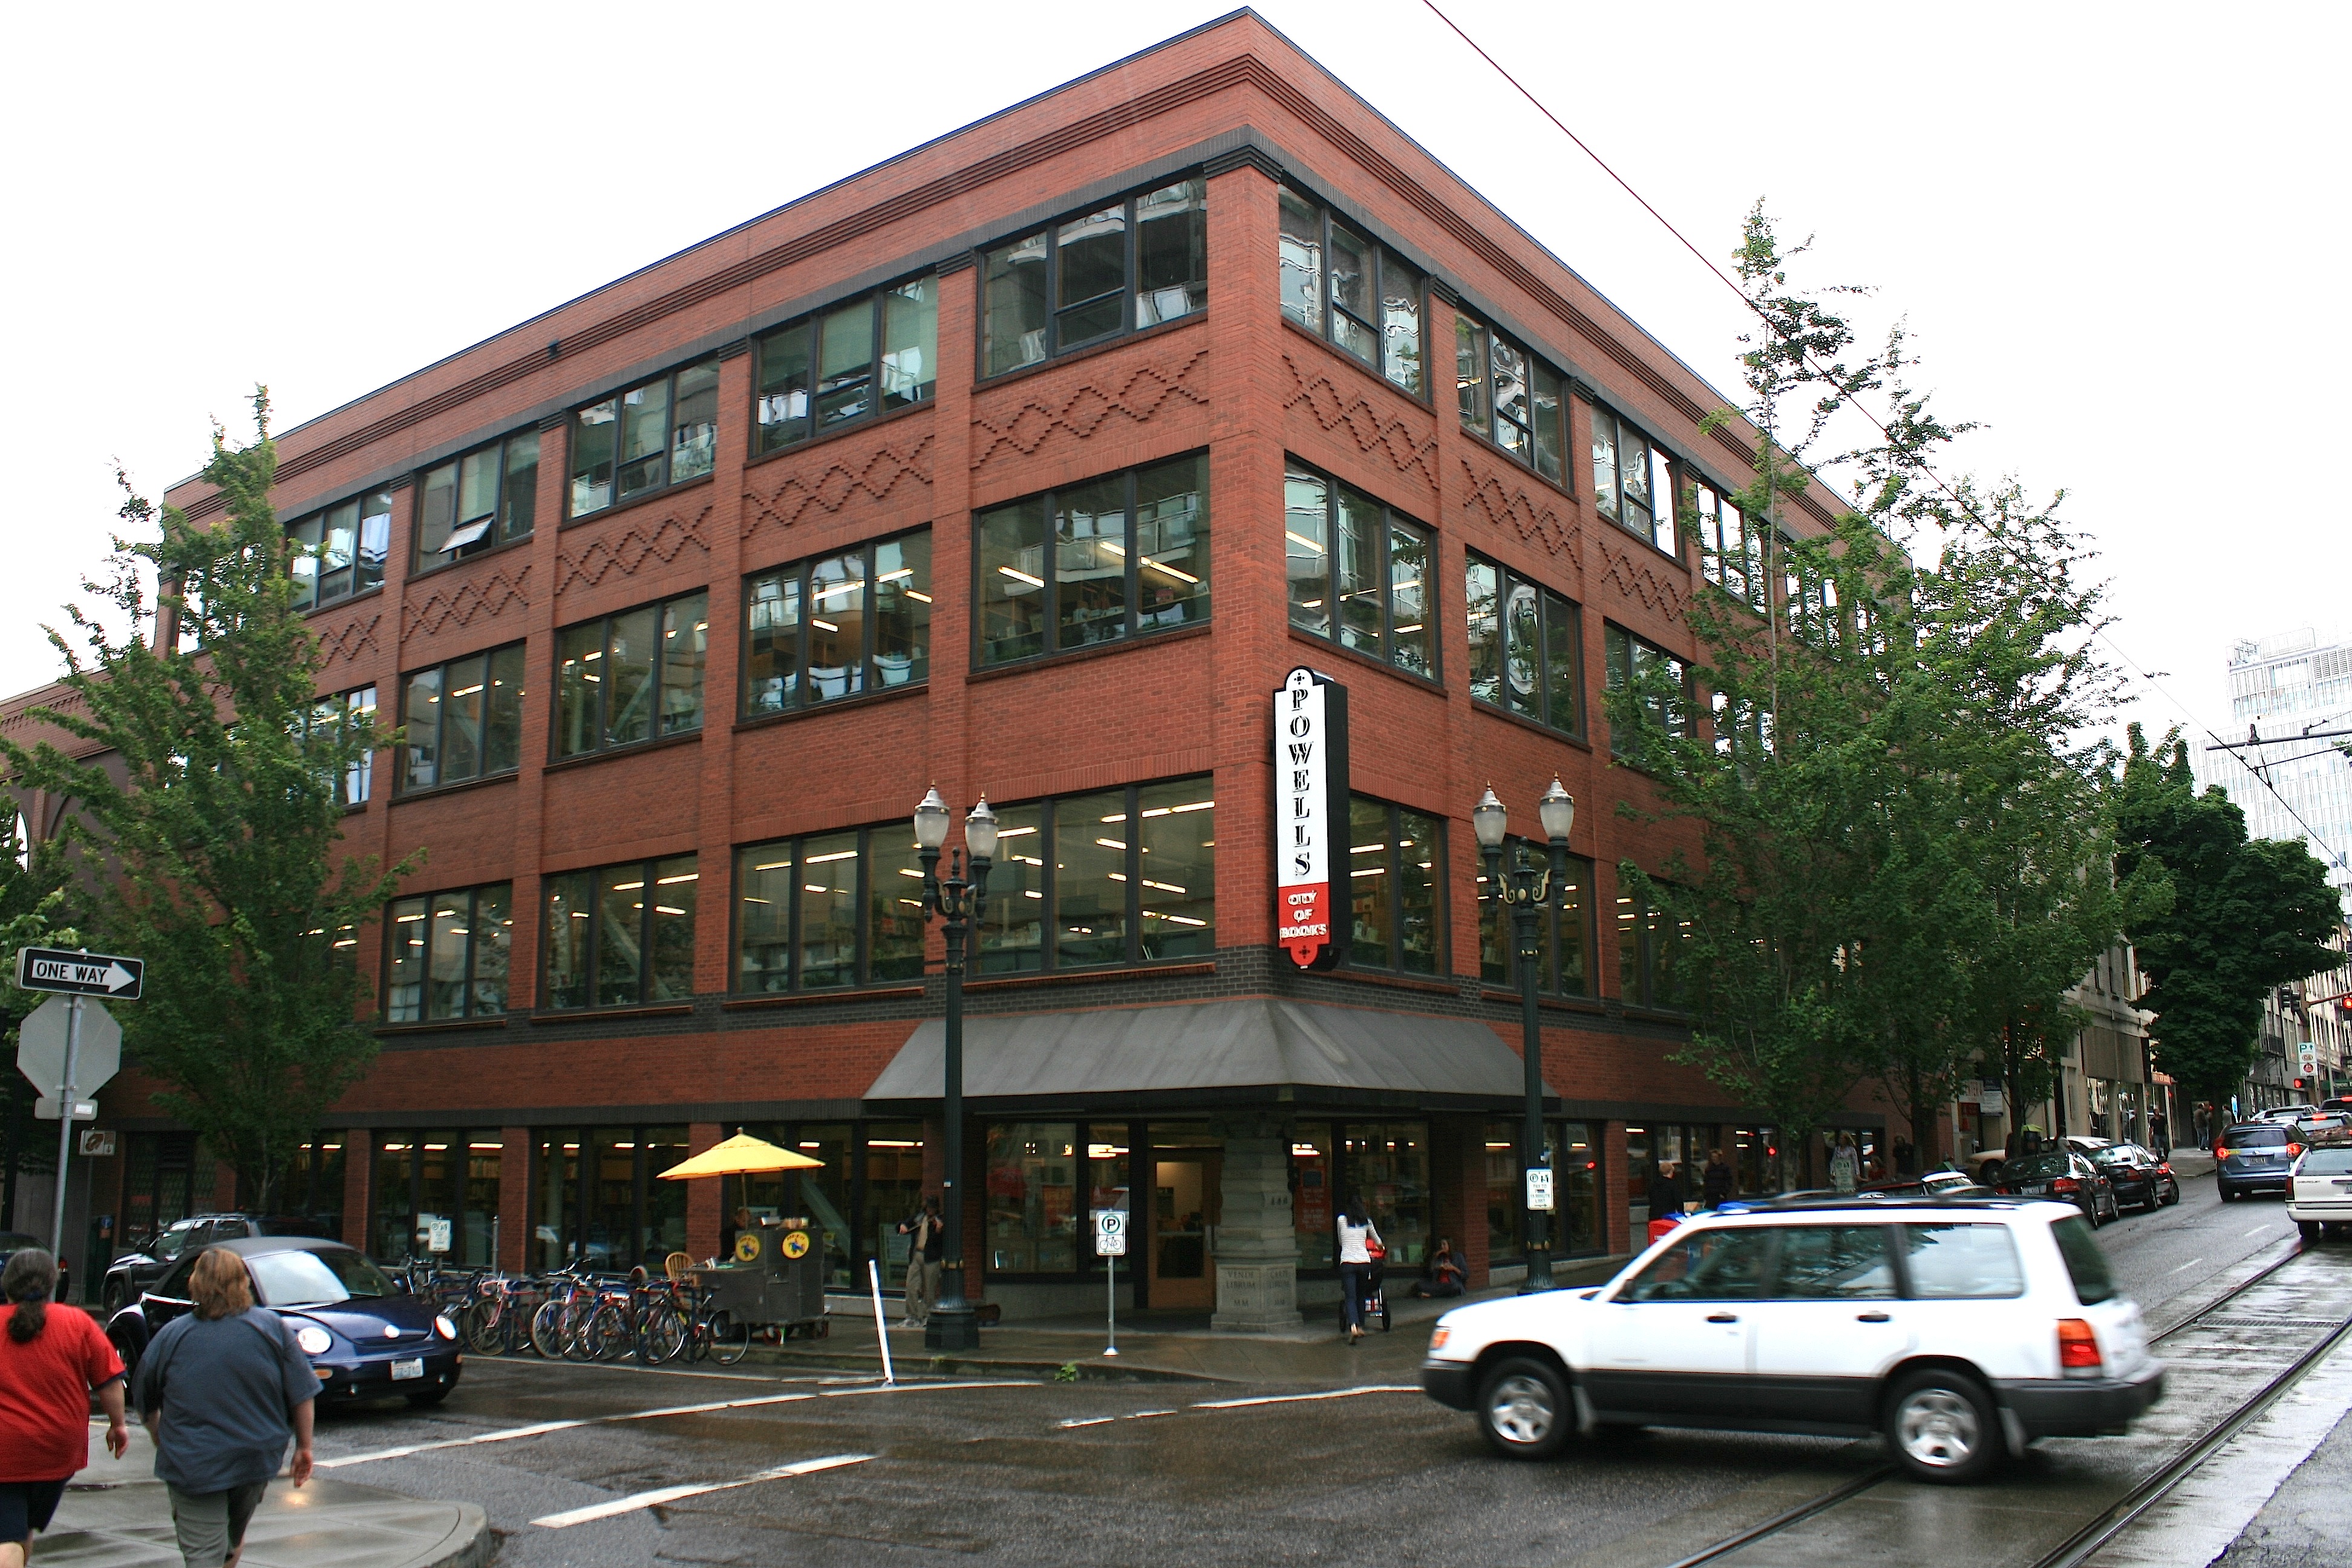 Powells Bookstore Portland Oregon Images Crazy Gallery 3888x2592